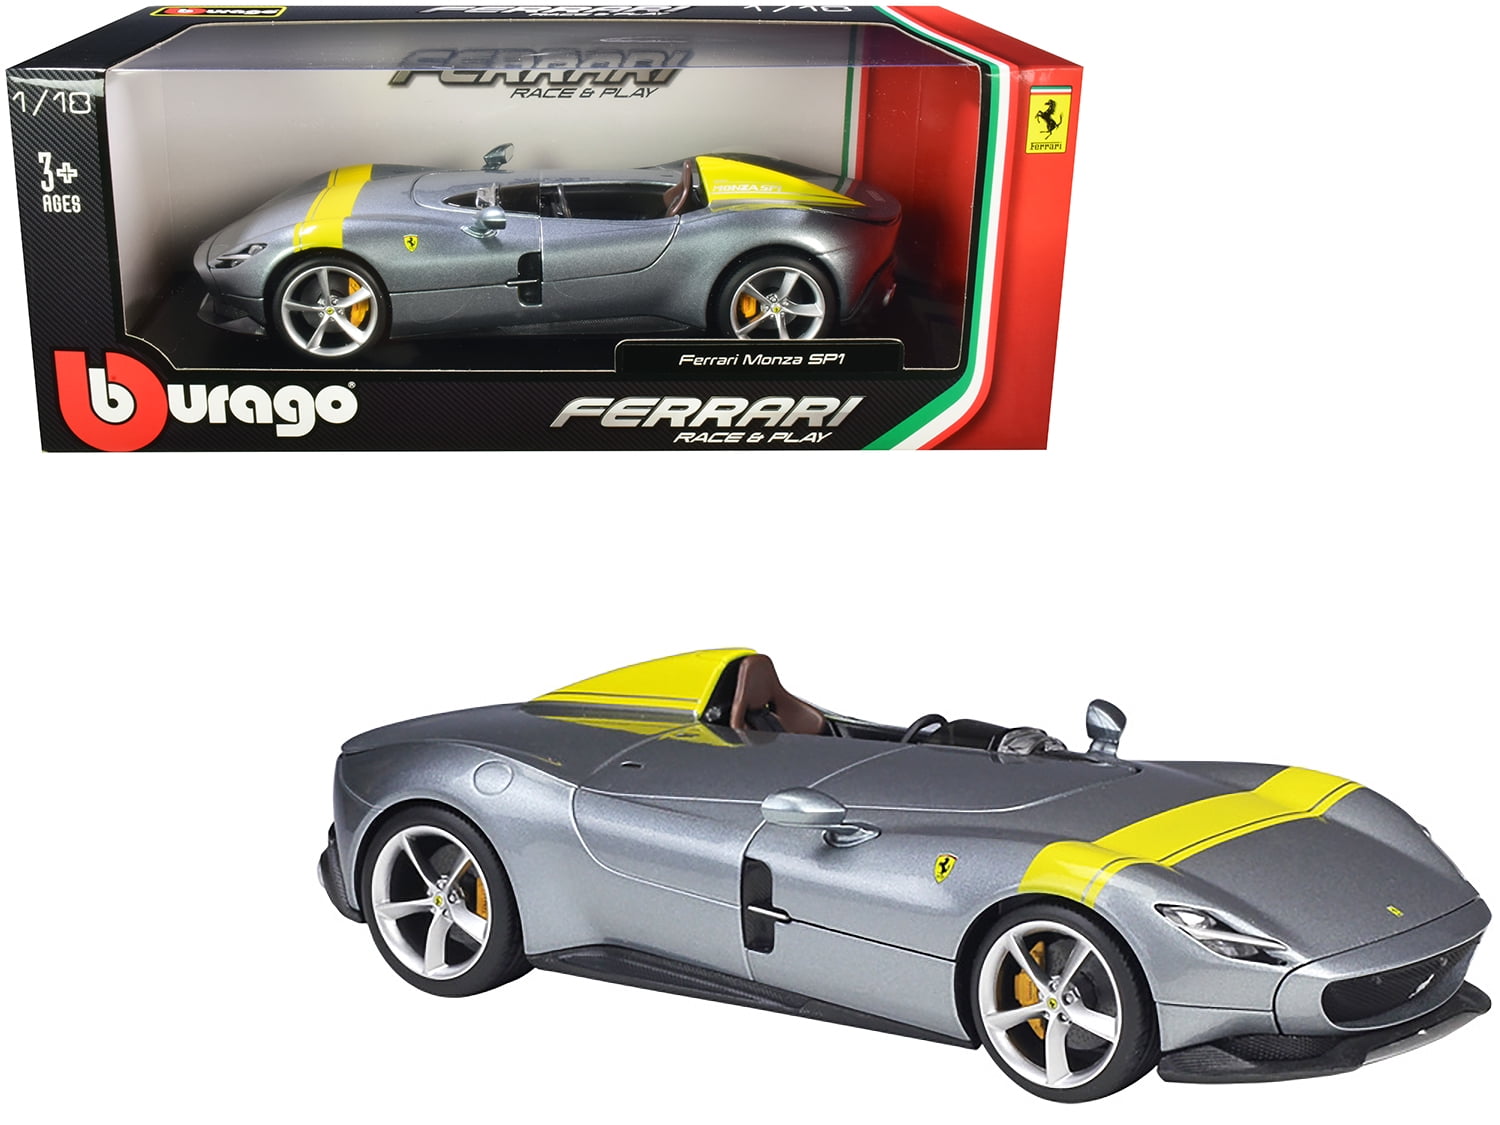 Model Car Scale 1:24 Burago Ferrari Monza SP1 diecast vehicles road 